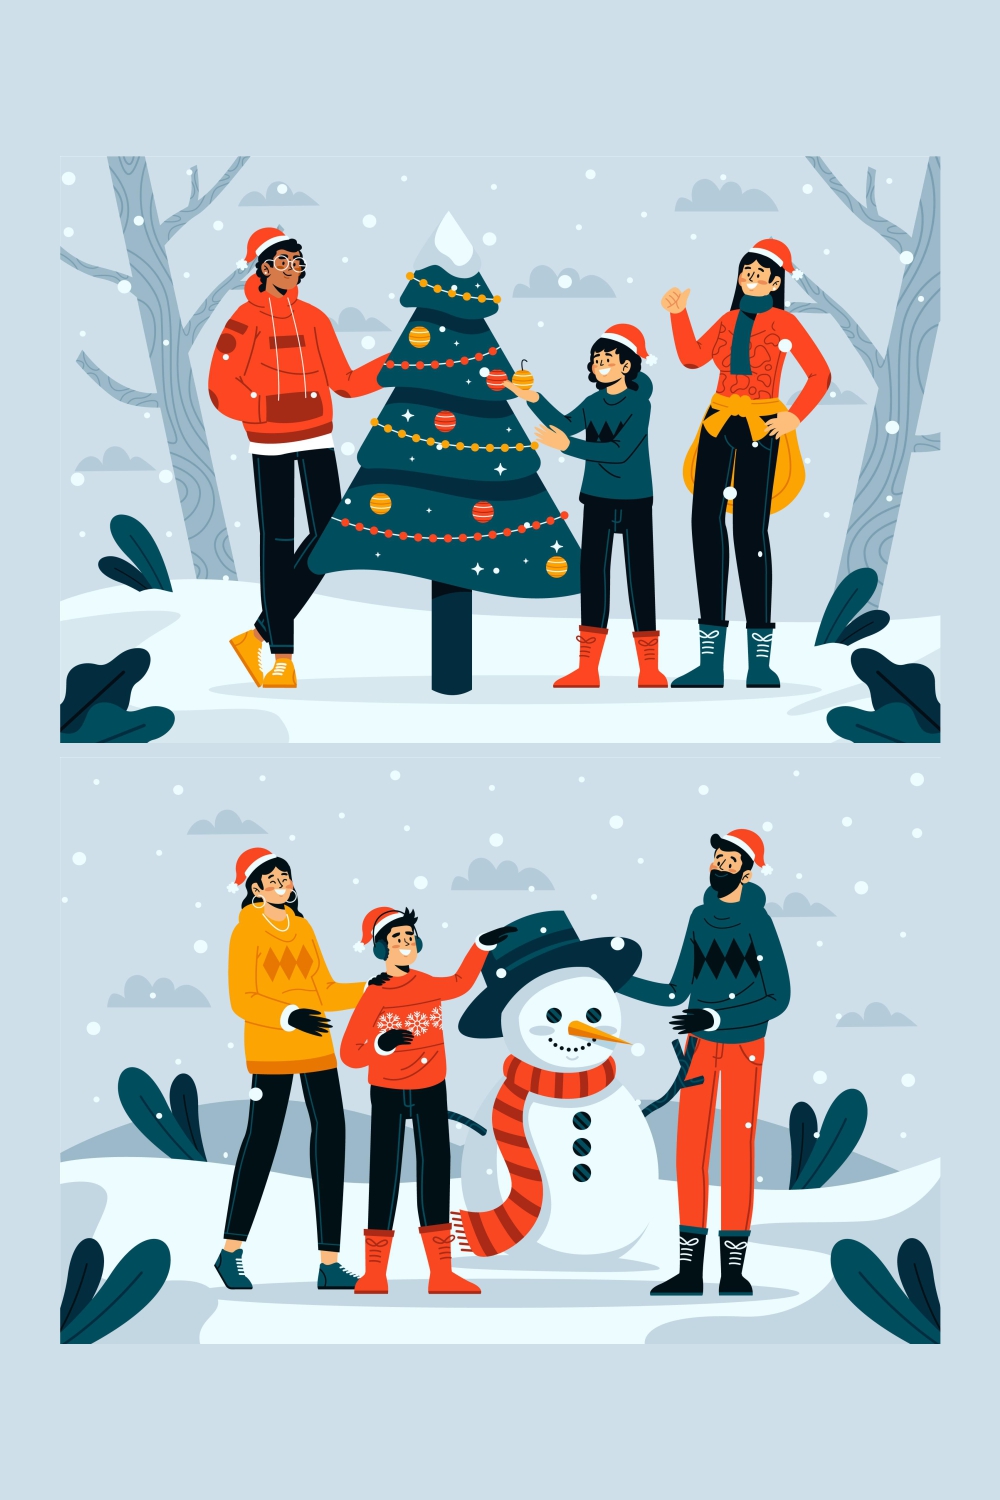 Best Christmas Decoration Design pinterest image.